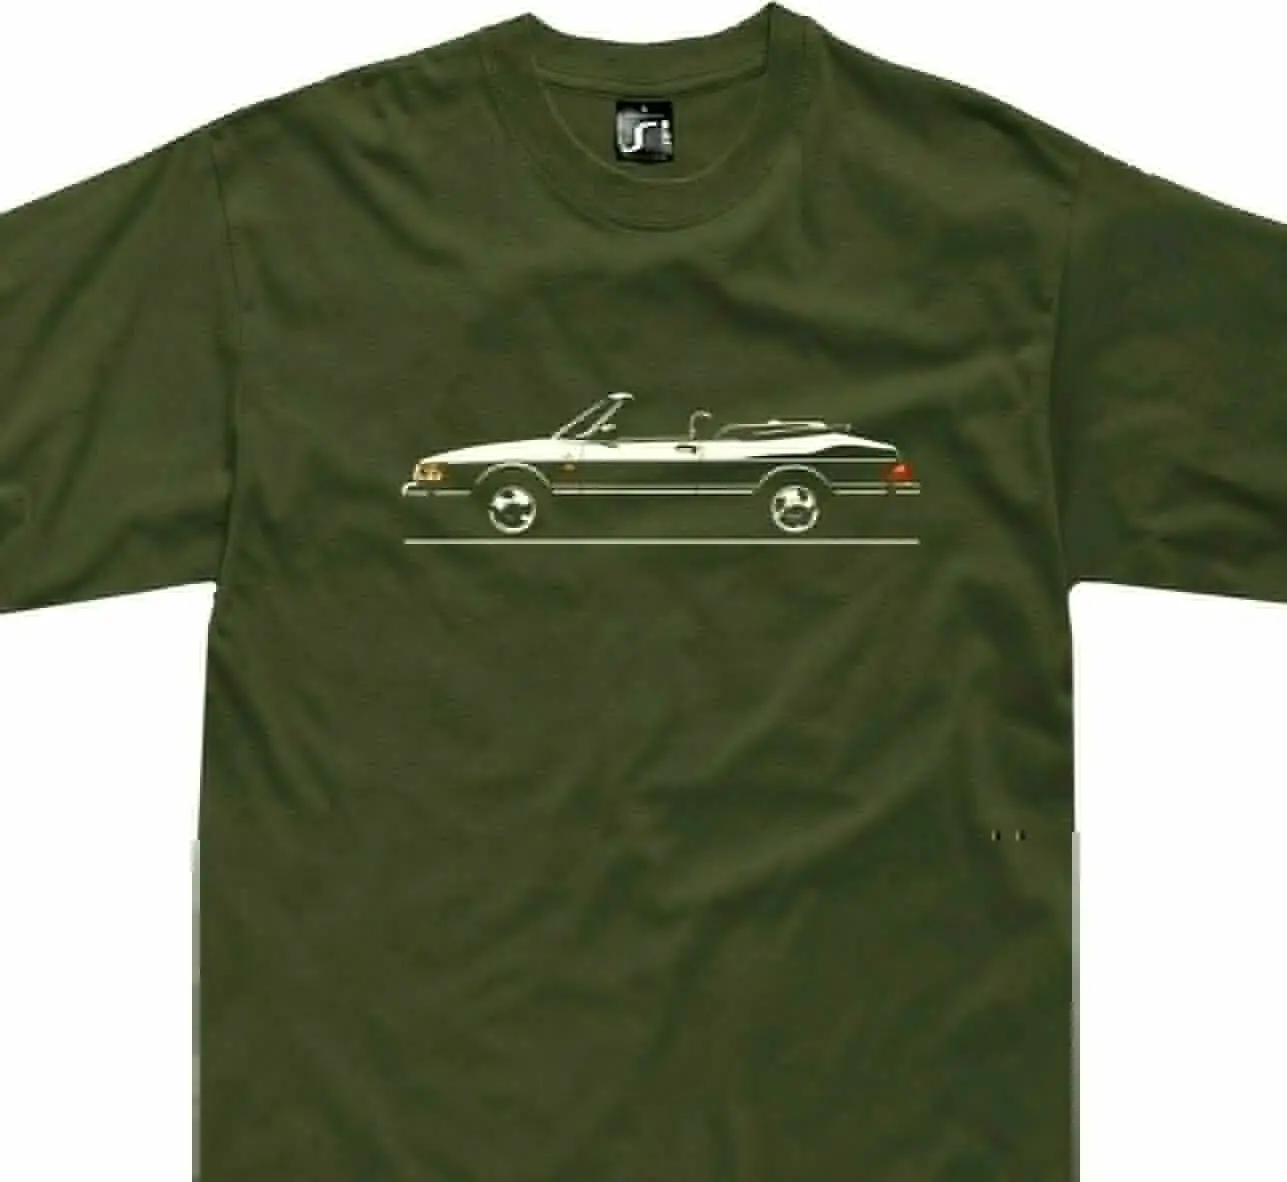 Majica za ljubitelje saab 900 cabrio, t-shirt s klasičnim кабриолетом turbo cabriolet, t-shirt s mekanim krovom